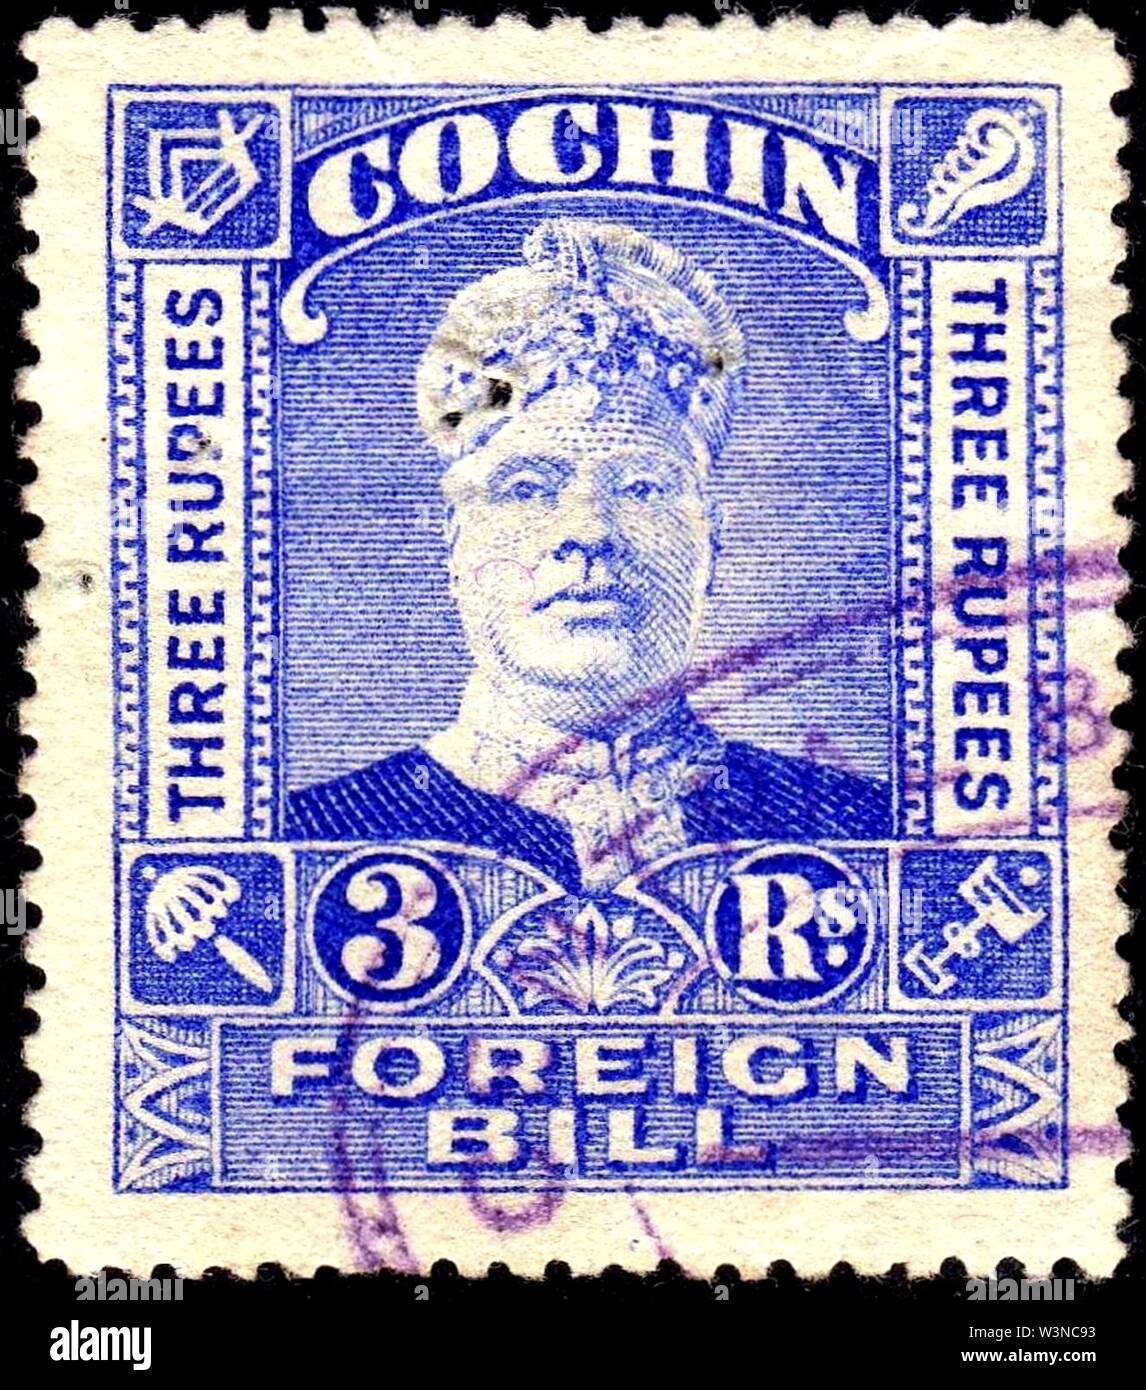 Cochin 3R foreign bill revenue stamp. Stock Photo